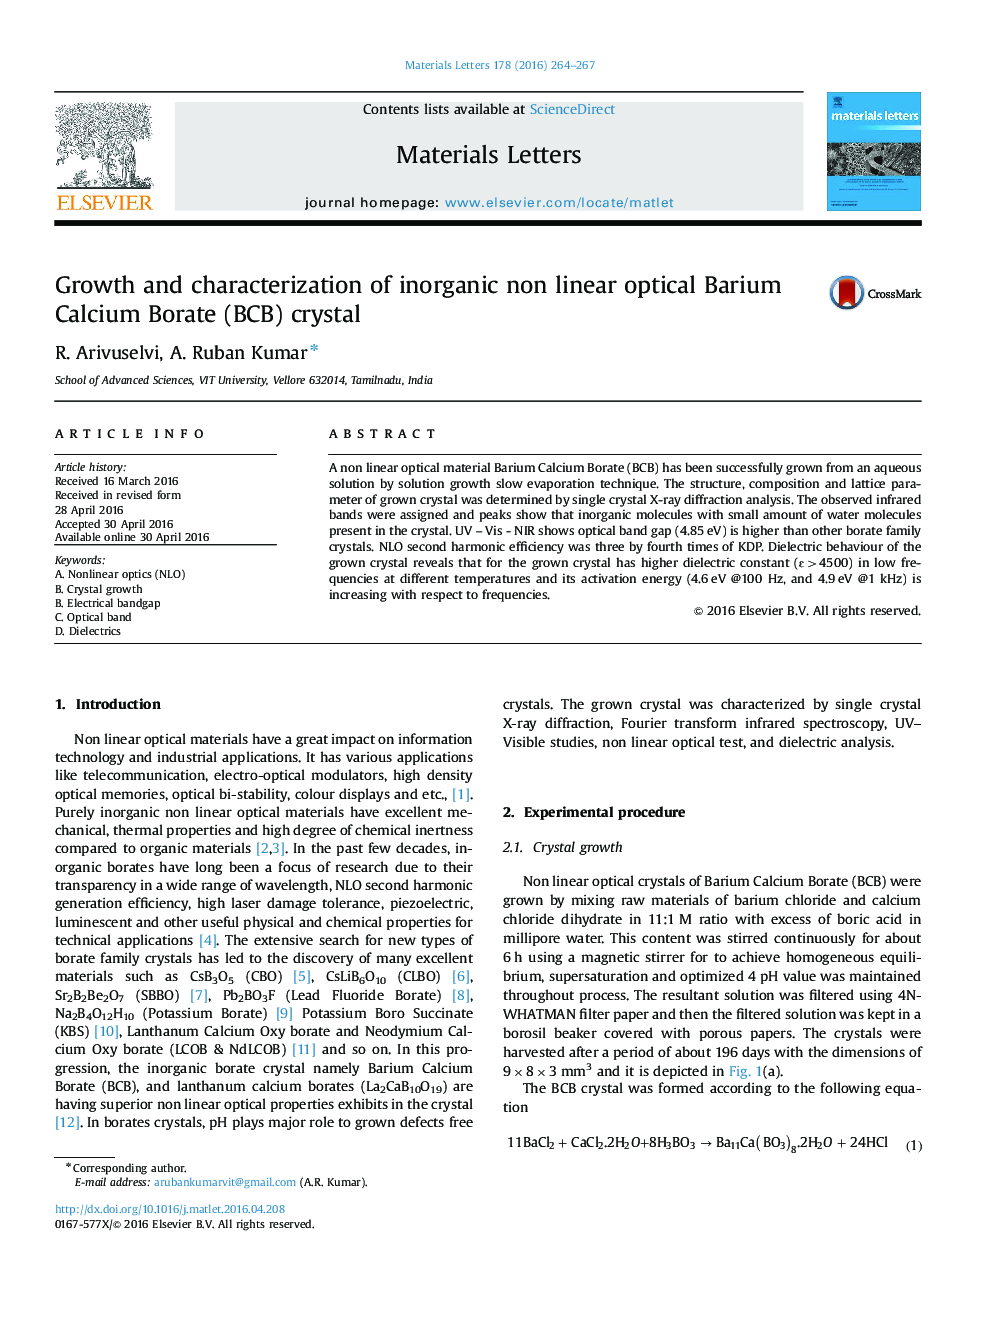 Growth and characterization of inorganic non linear opticalÂ Barium Calcium Borate (BCB) crystal